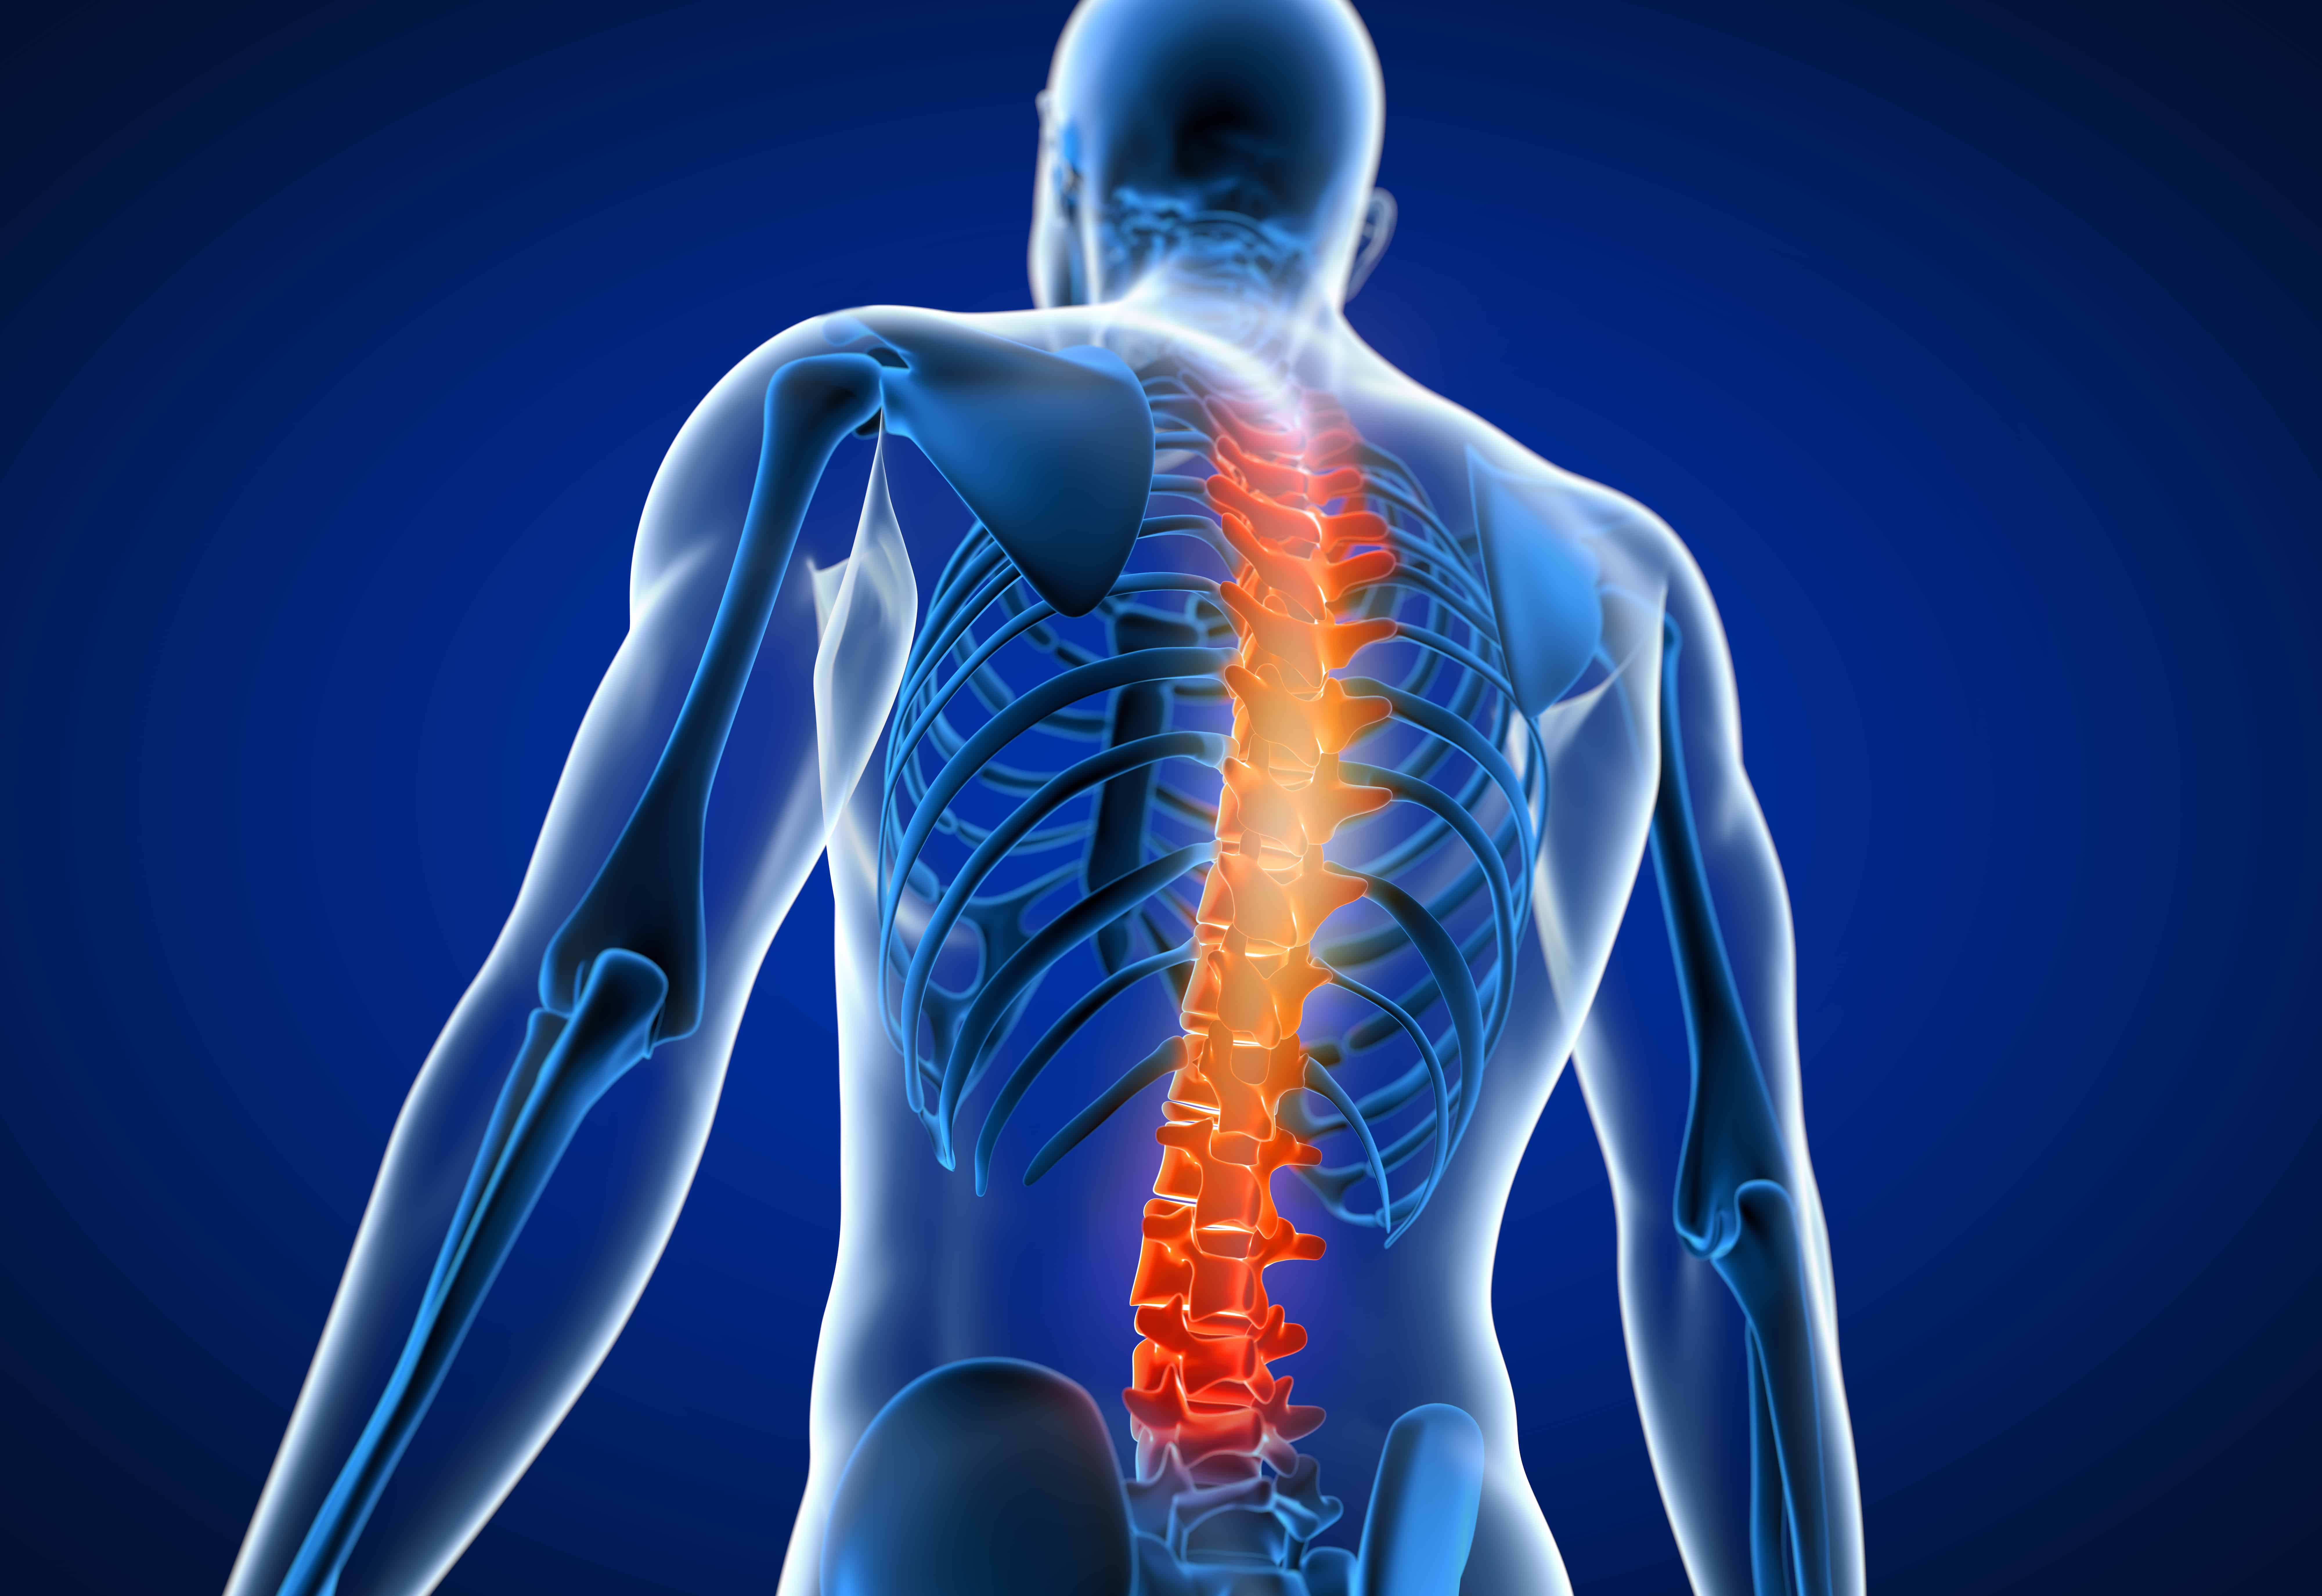 Neck Pain Symptoms, Treatments and Solutions: Progressive Spine & Sports  Medicine: Pain Medicine